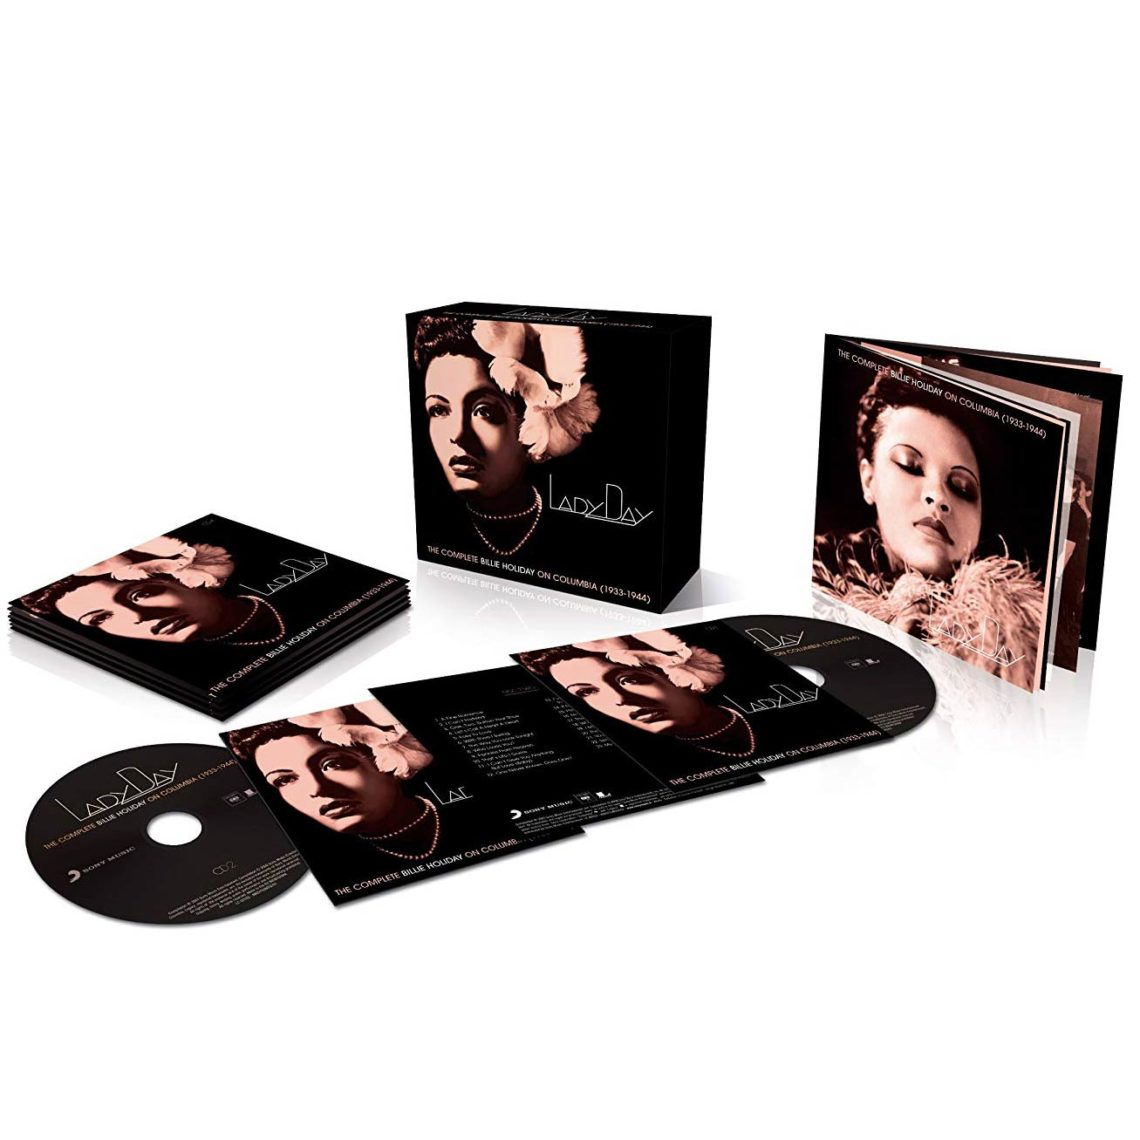 Complete Billie Holiday On Verve 1945 – 1959 - Album by Billie Holiday ...